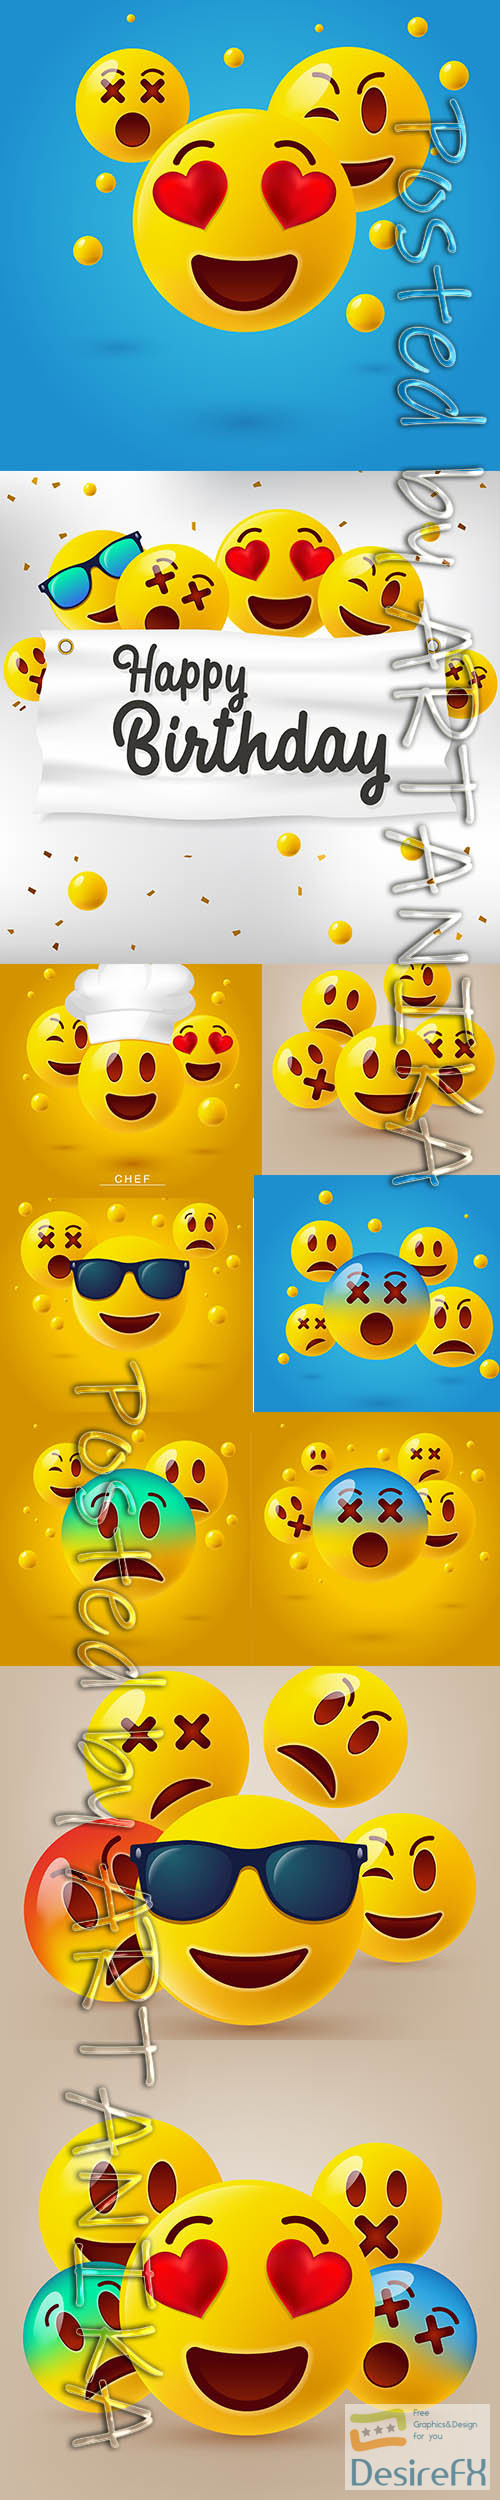 Cute Emoticons Illustration Vector Set